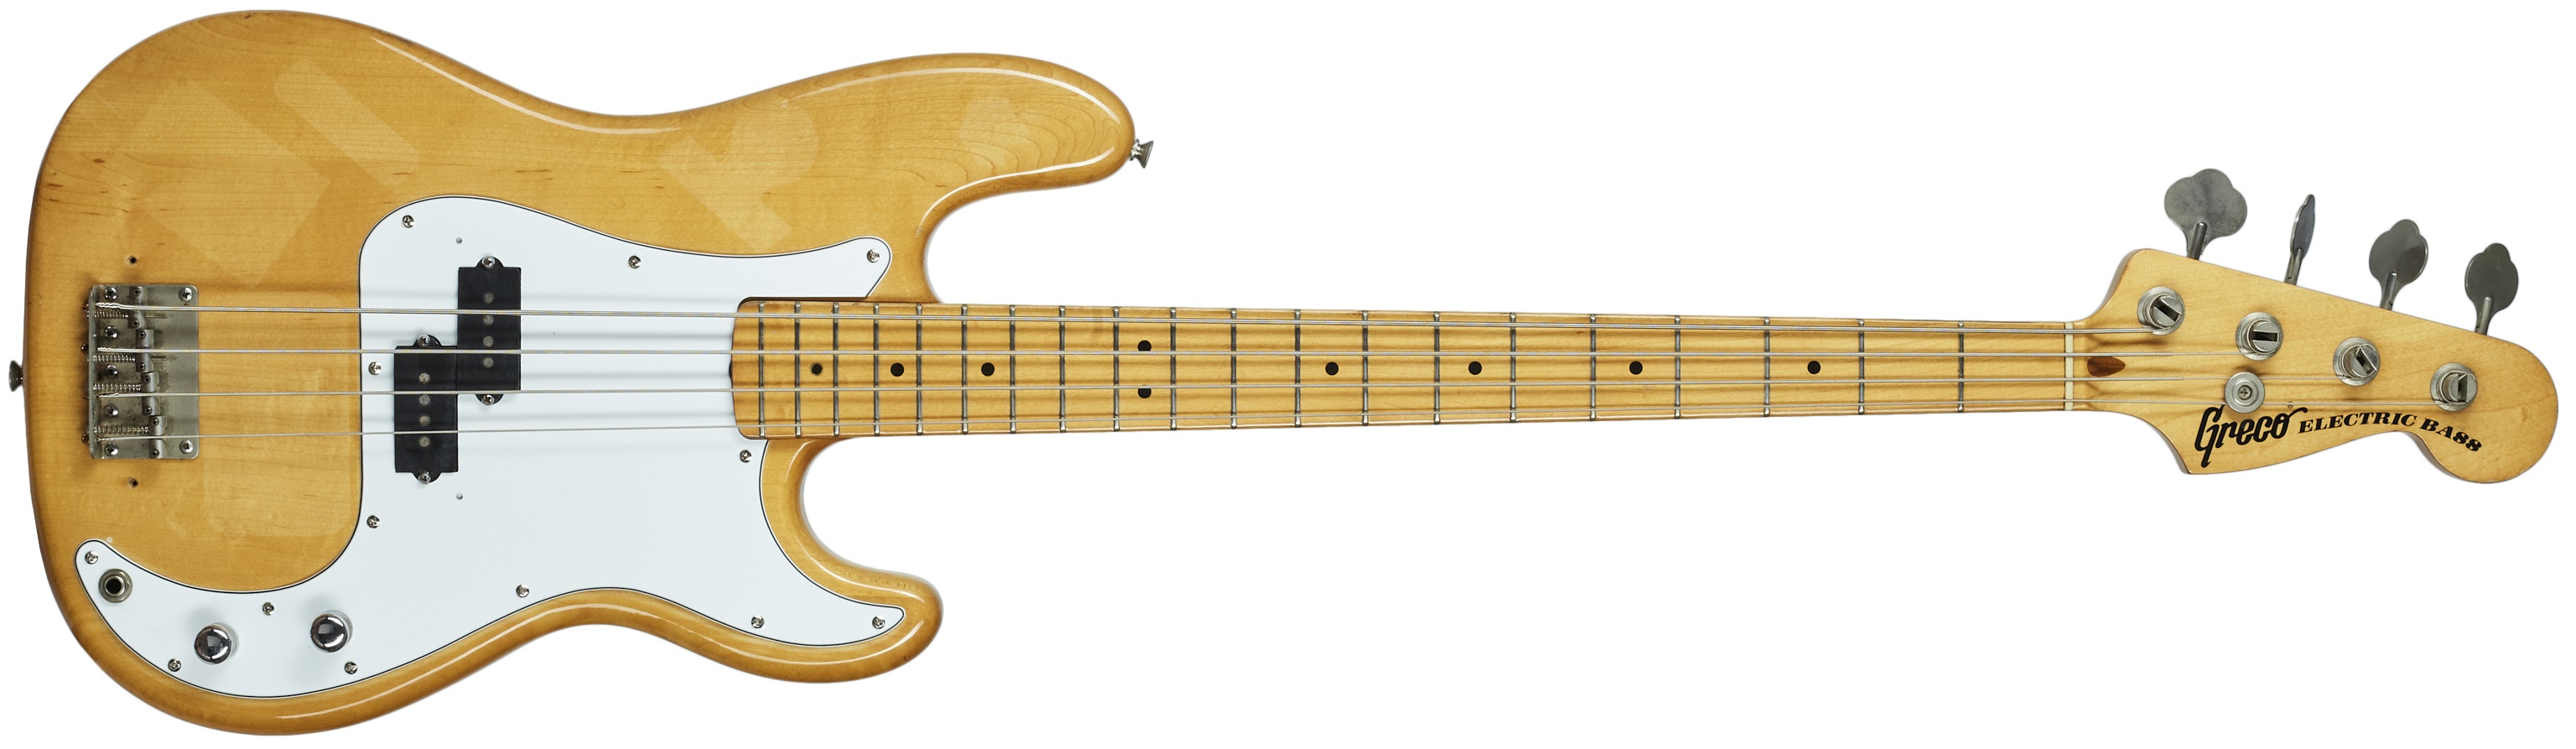 Greco 1975 Electric Bass PB-580 Natural